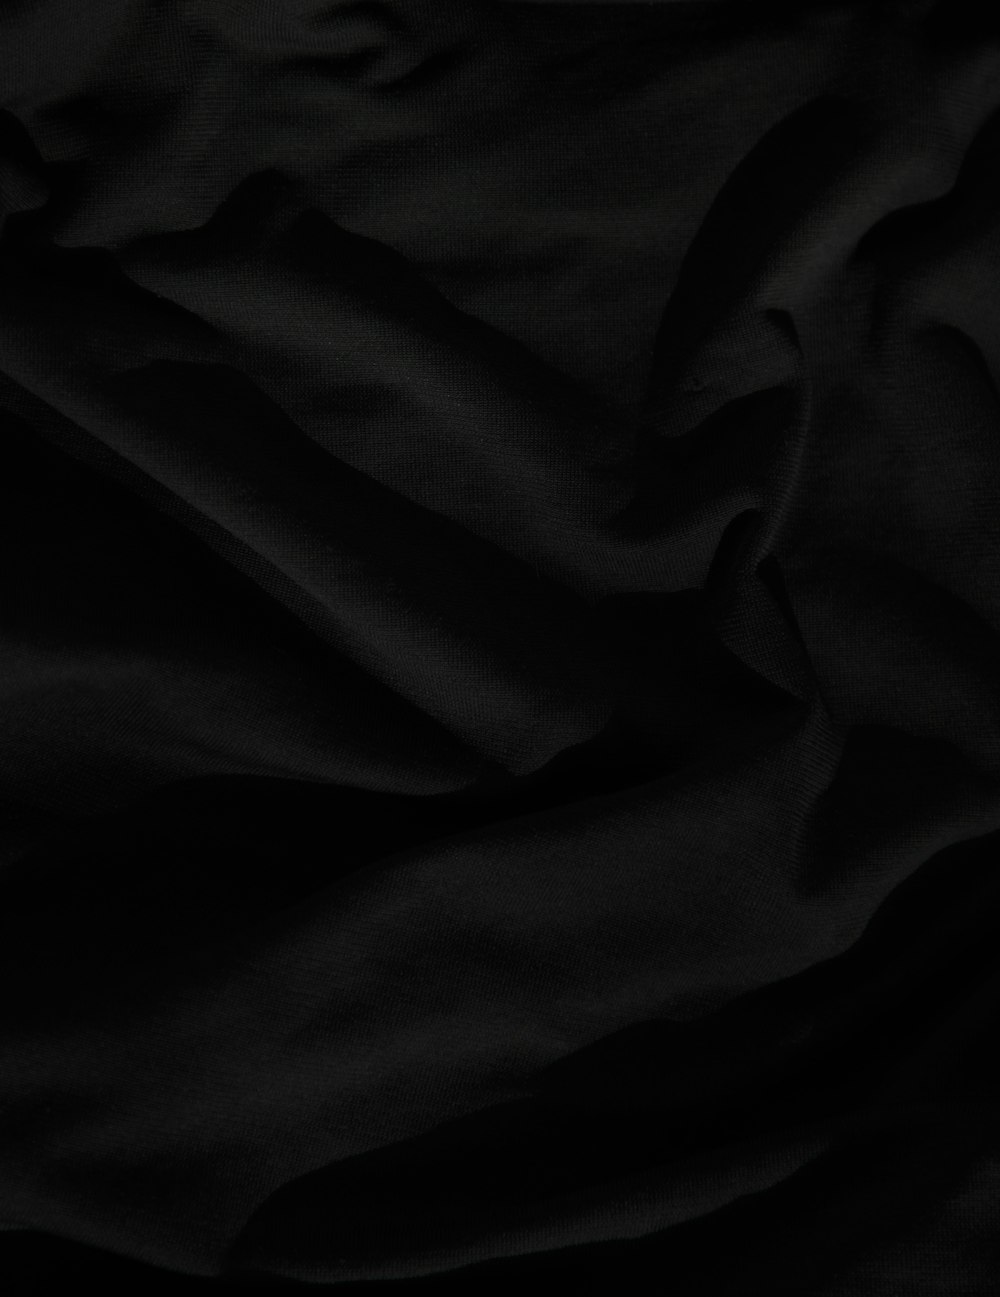 têxtil preto sobre o têxtil branco